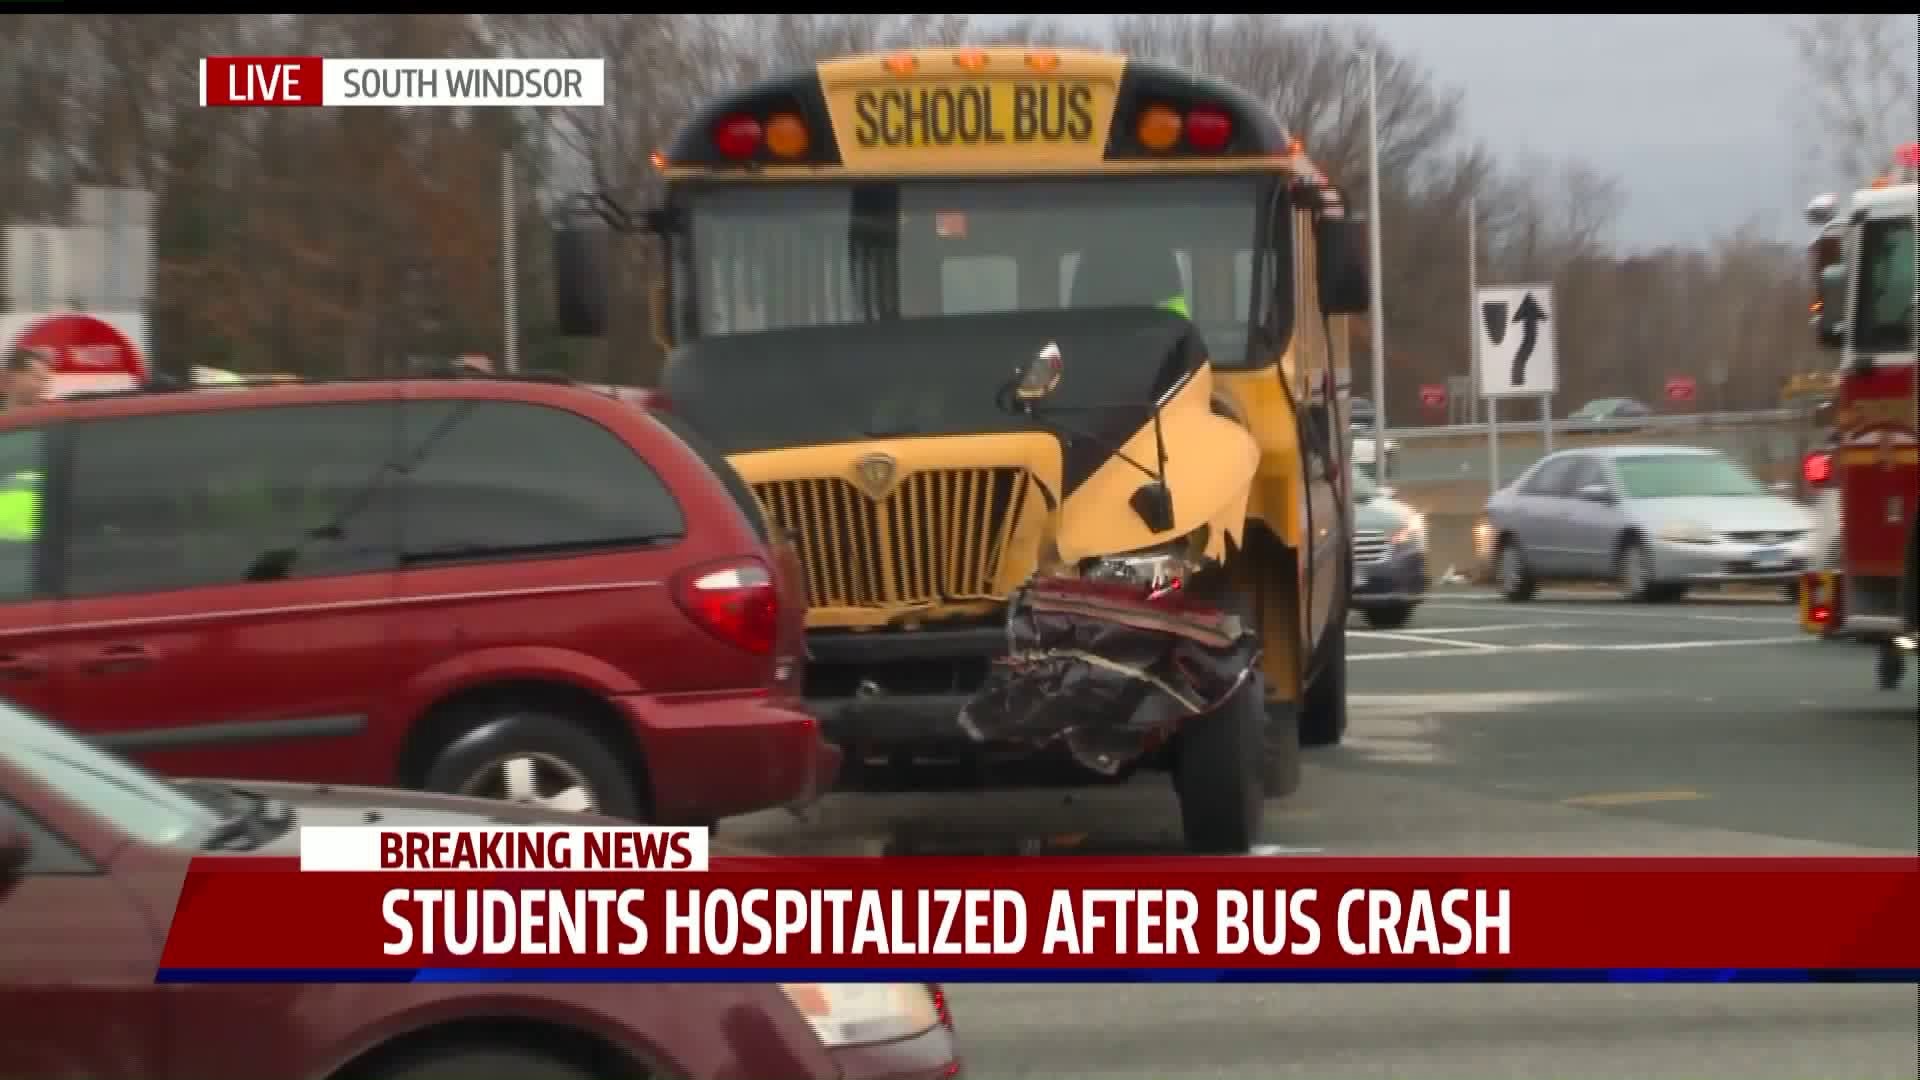 School bus crash in South Windsor